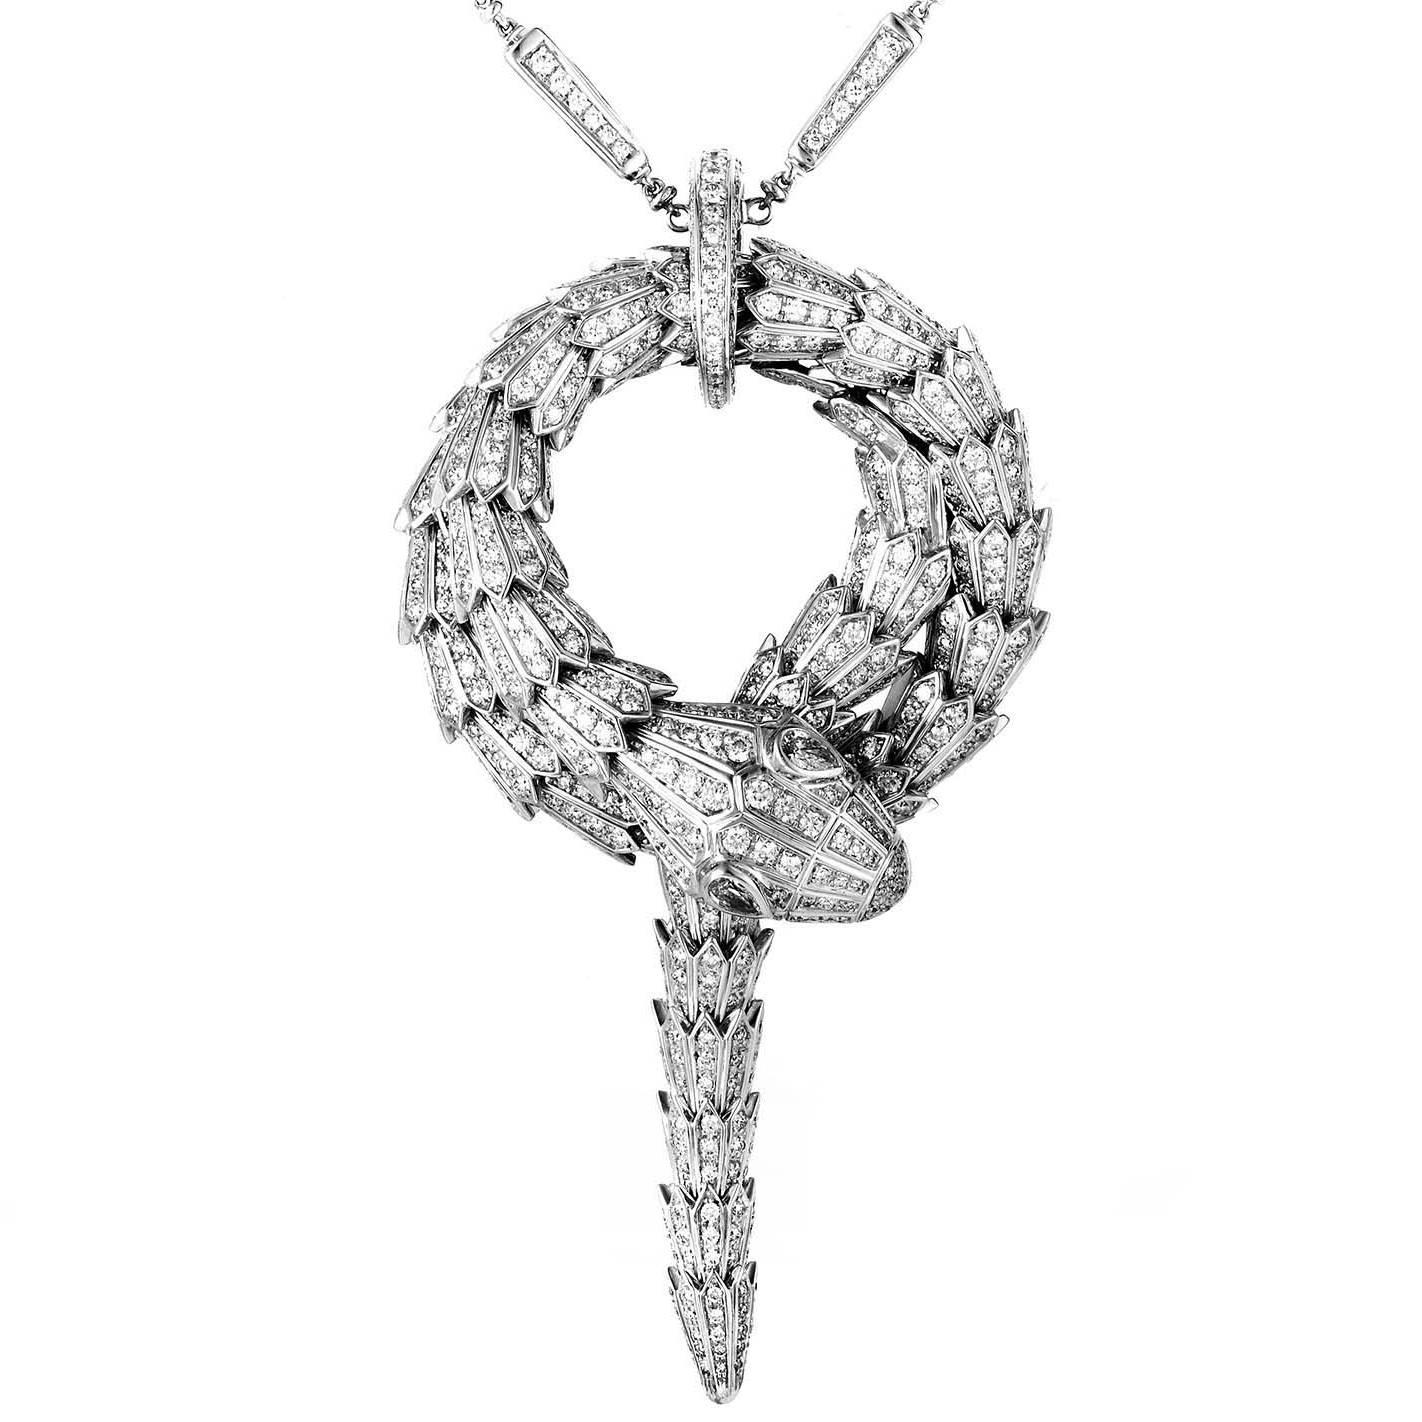 Bulgari Serpenti Necklace - 3 For Sale on 1stDibs | bulgari serpenti  necklace price, bvlgari necklace snake price, bulgari snake necklace